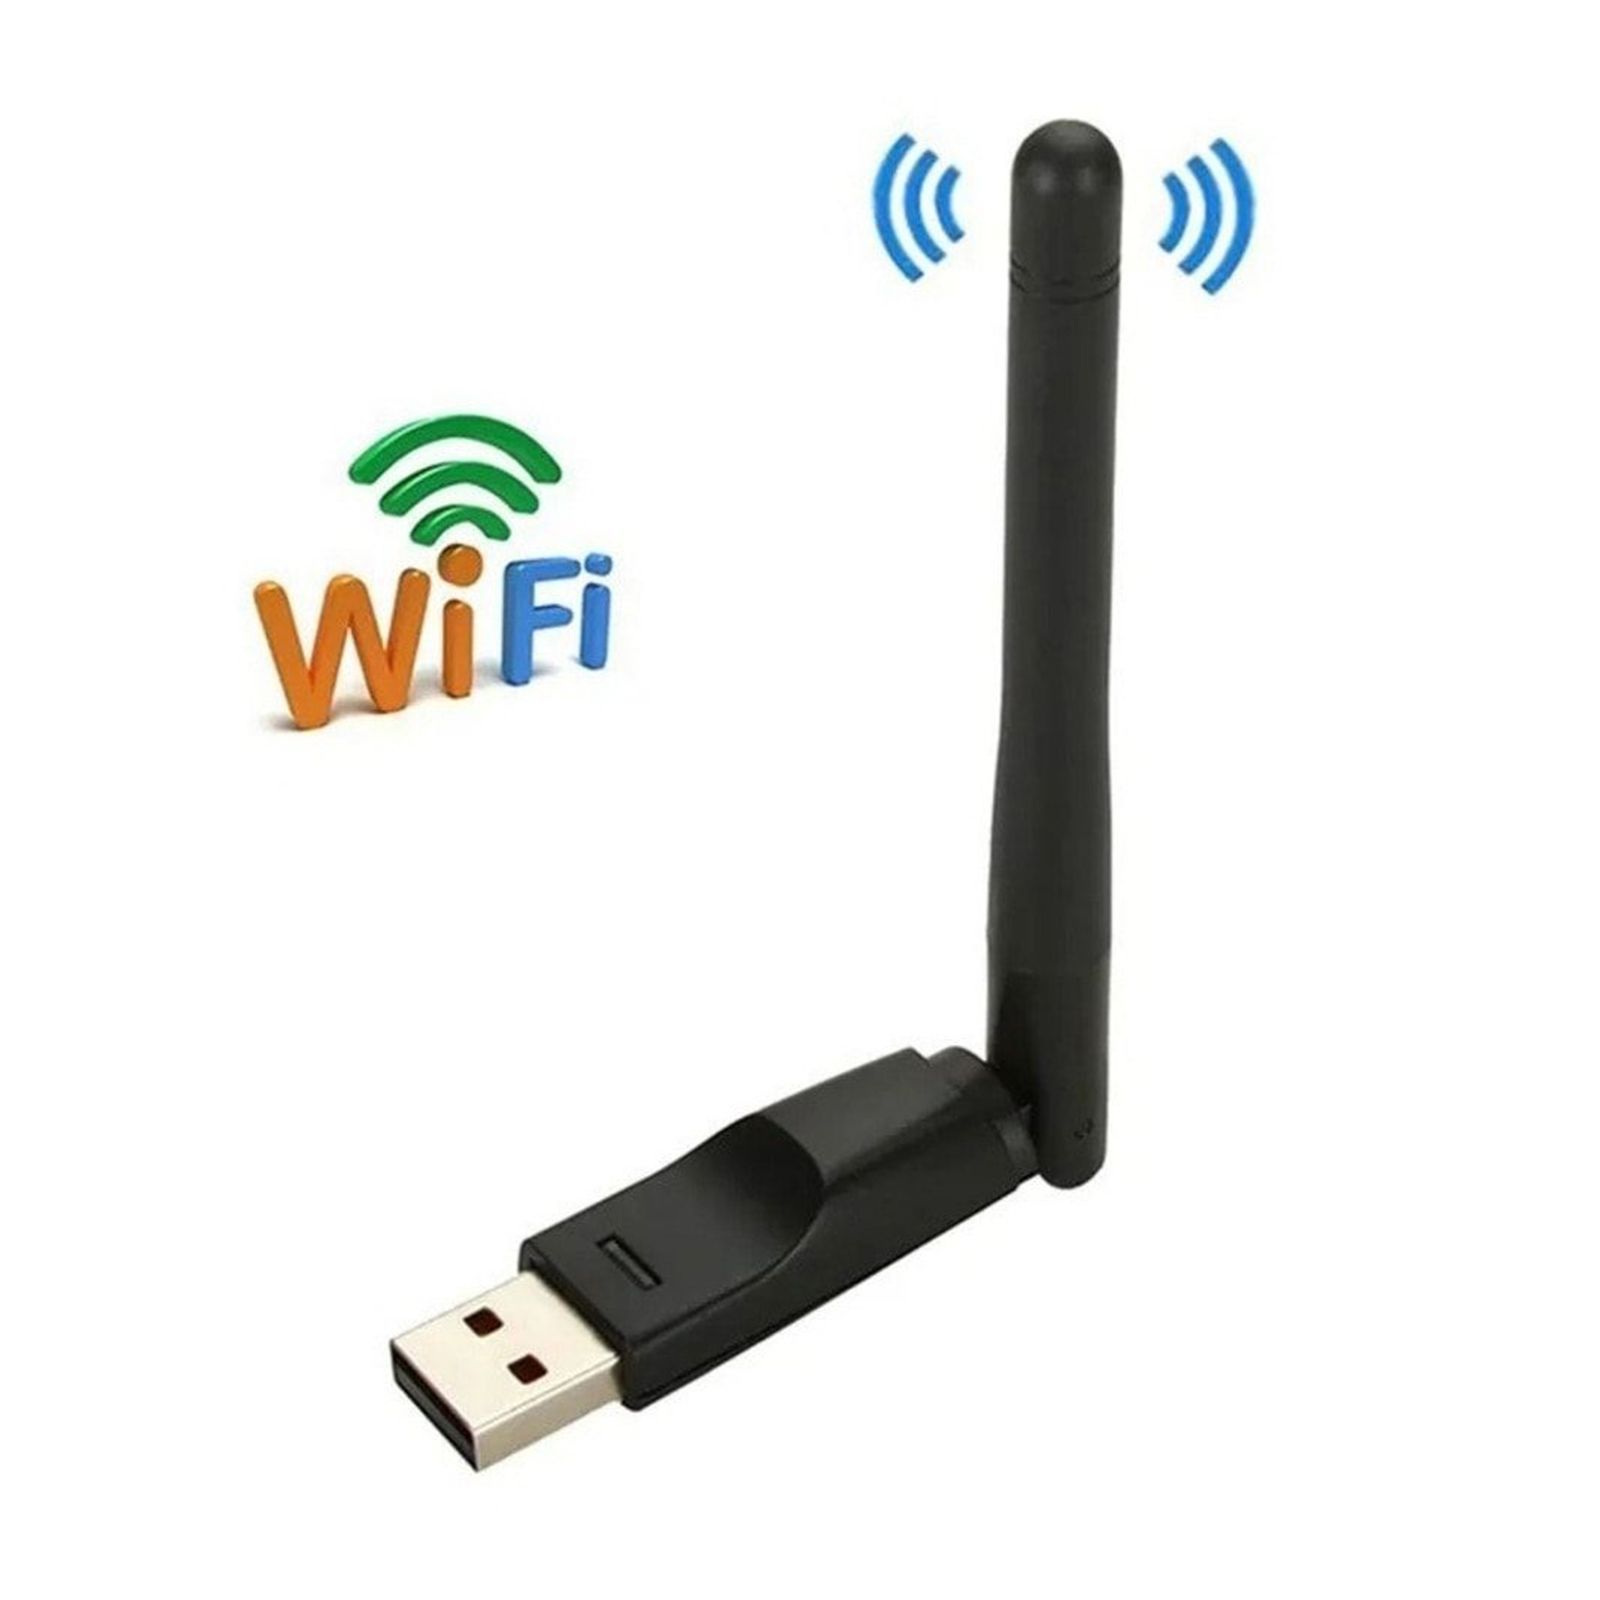 WIFI адаптер mt7601. Wi-Fi адаптер USB mt7601. USB WIFI адаптер rt7601. USB WIFI адаптер с антенной Chipset mt7601. Usb адаптер с антенной